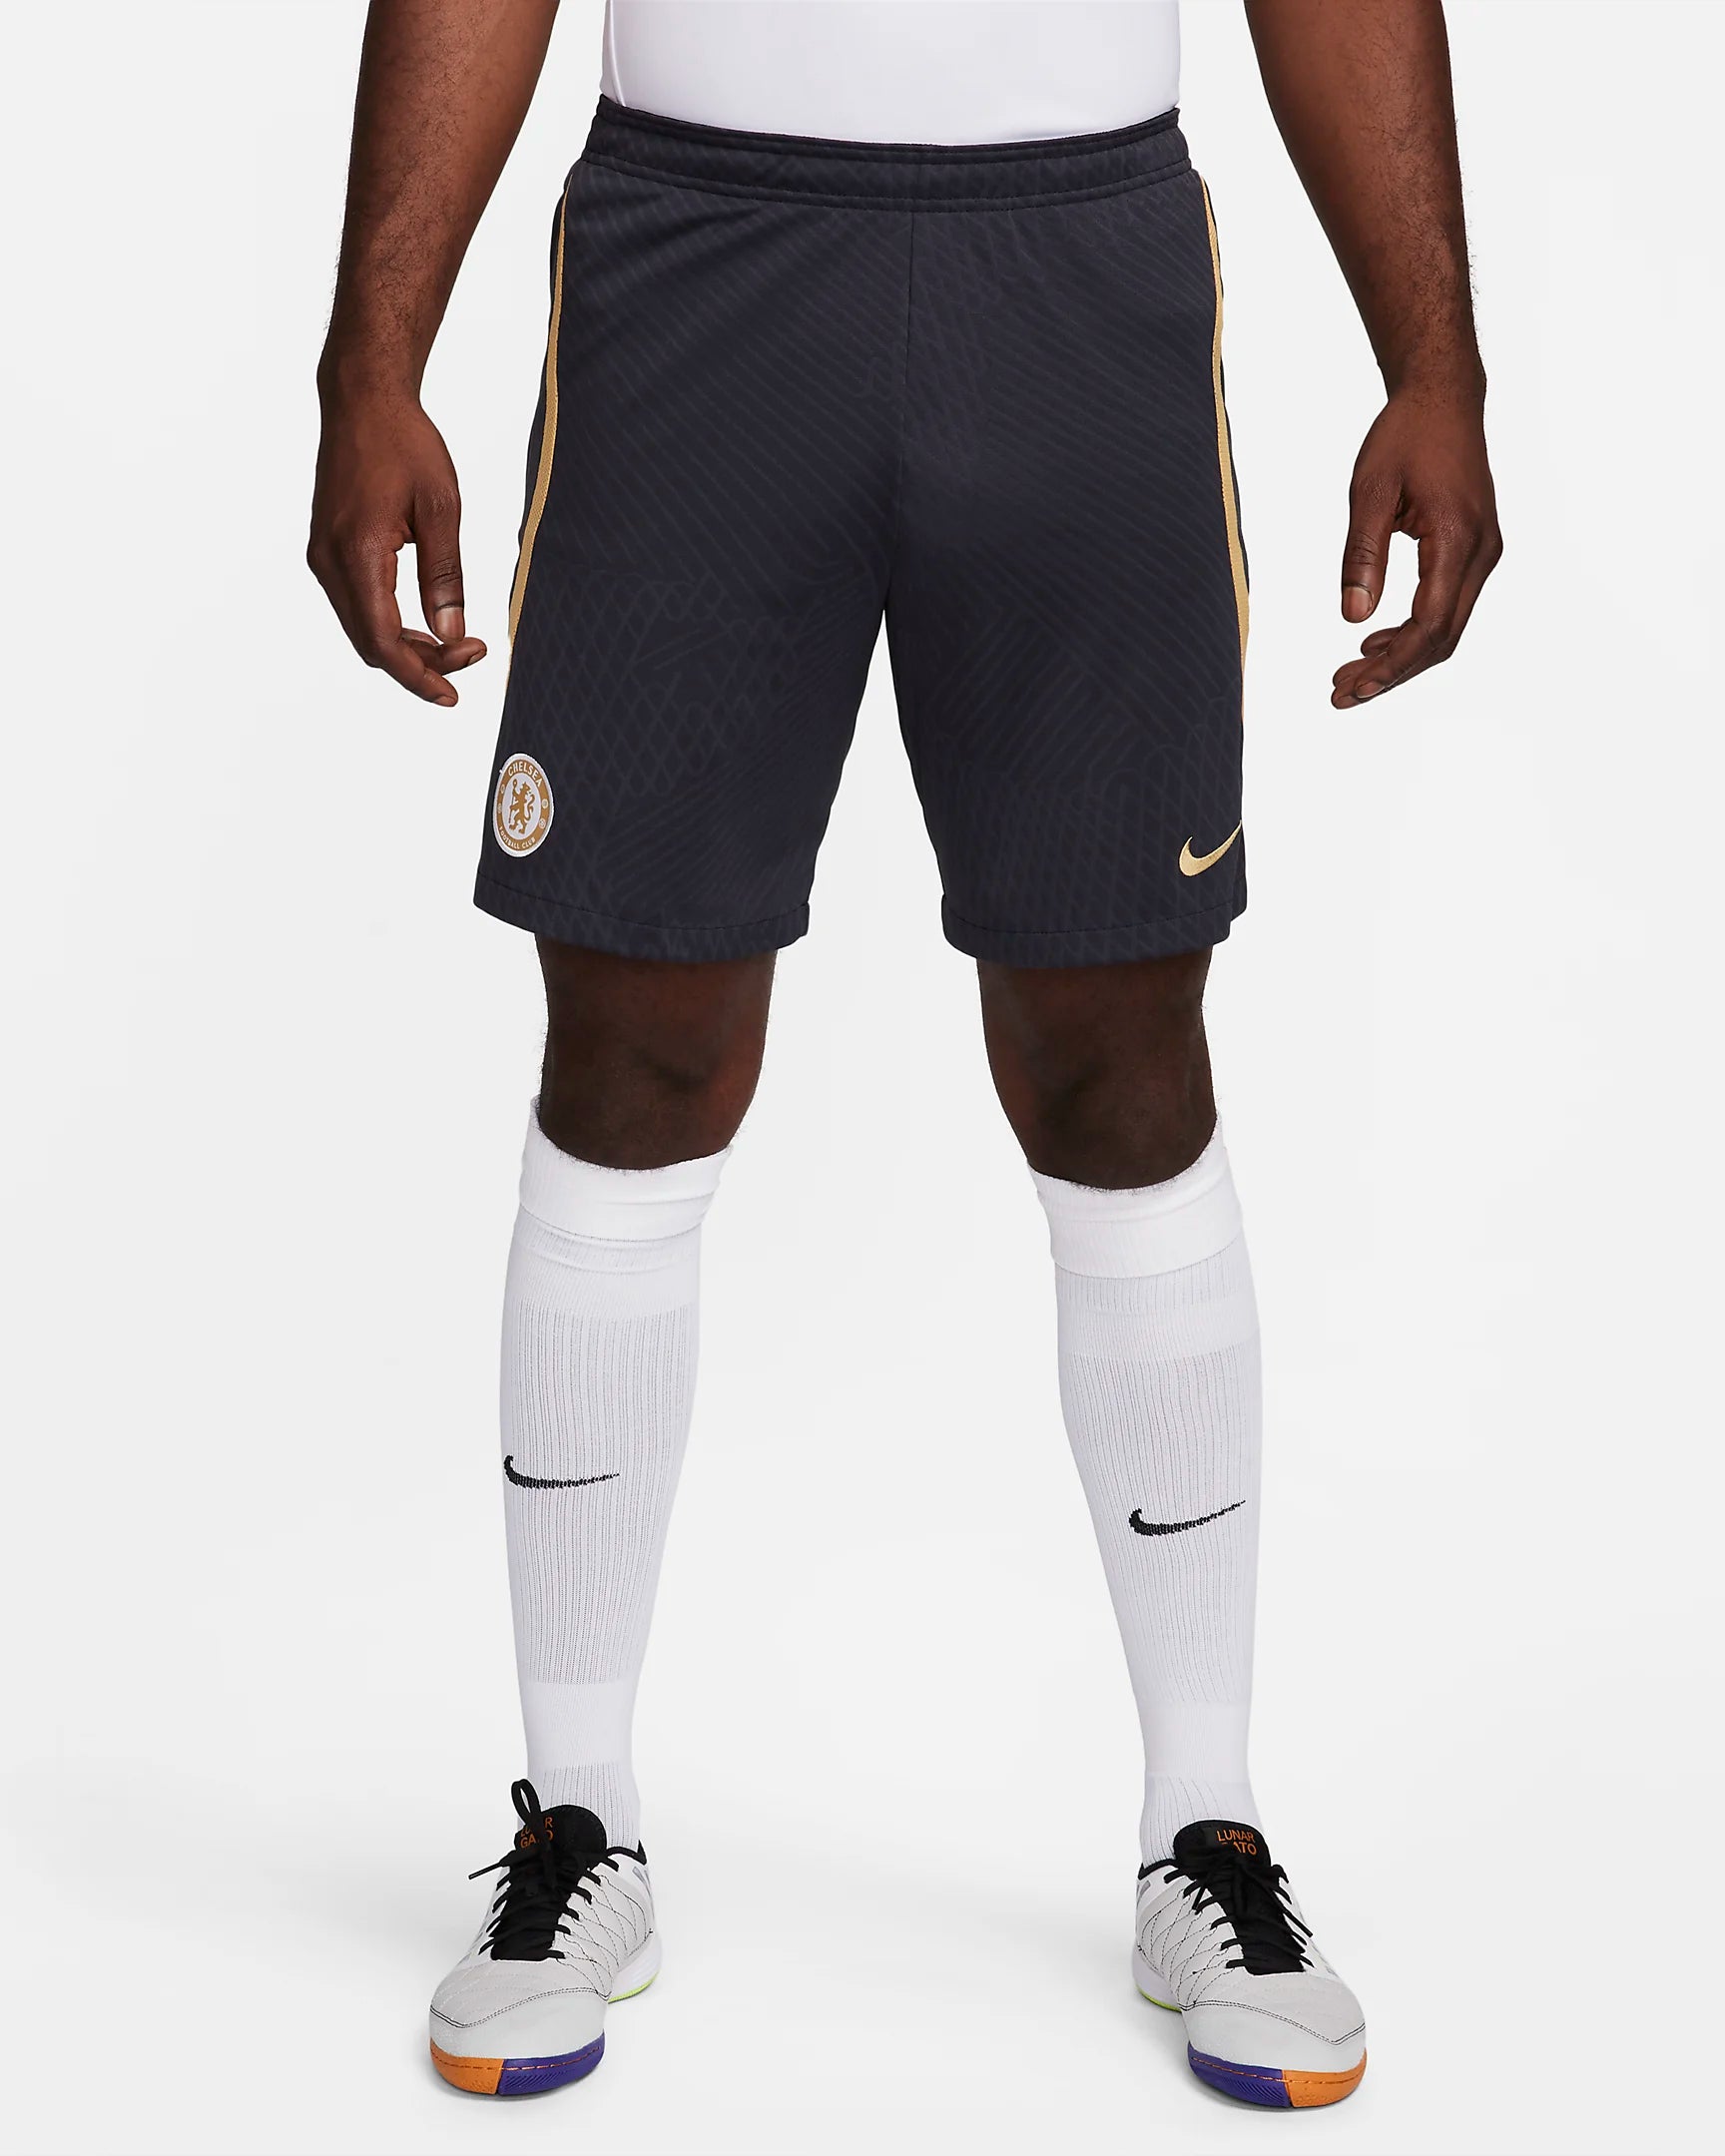 Chelsea training shorts 2023/2024 - Black/Gold